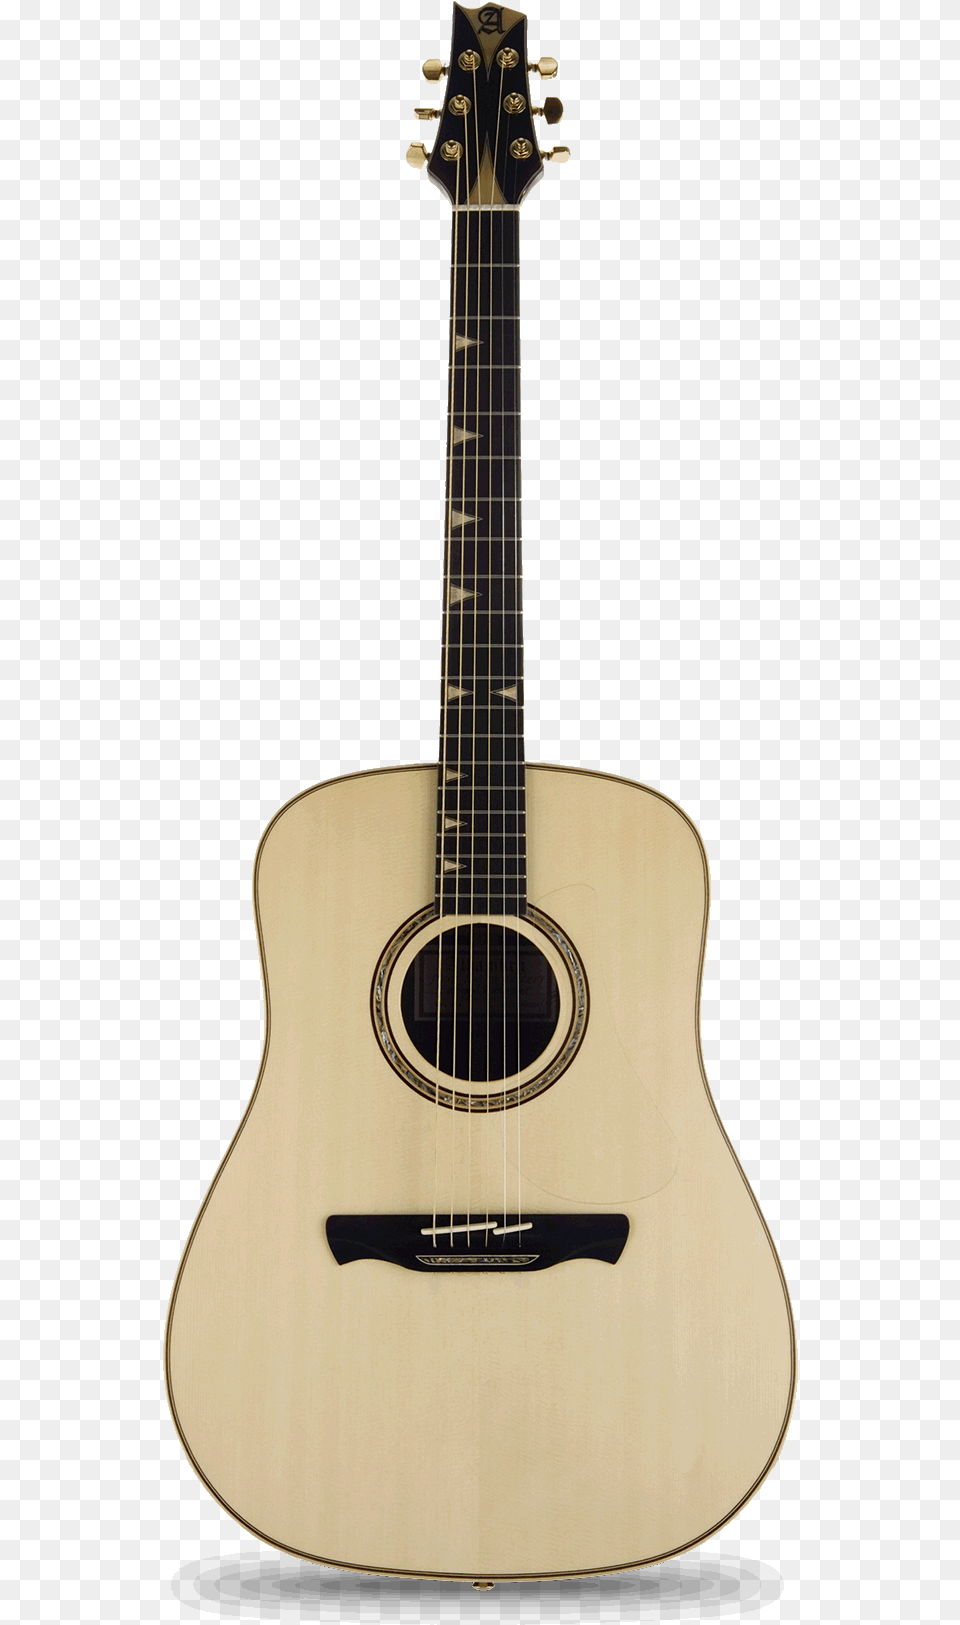 Guitarras Alhambra Acoustic Guitars Alhambra, Guitar, Musical Instrument, Bass Guitar Png